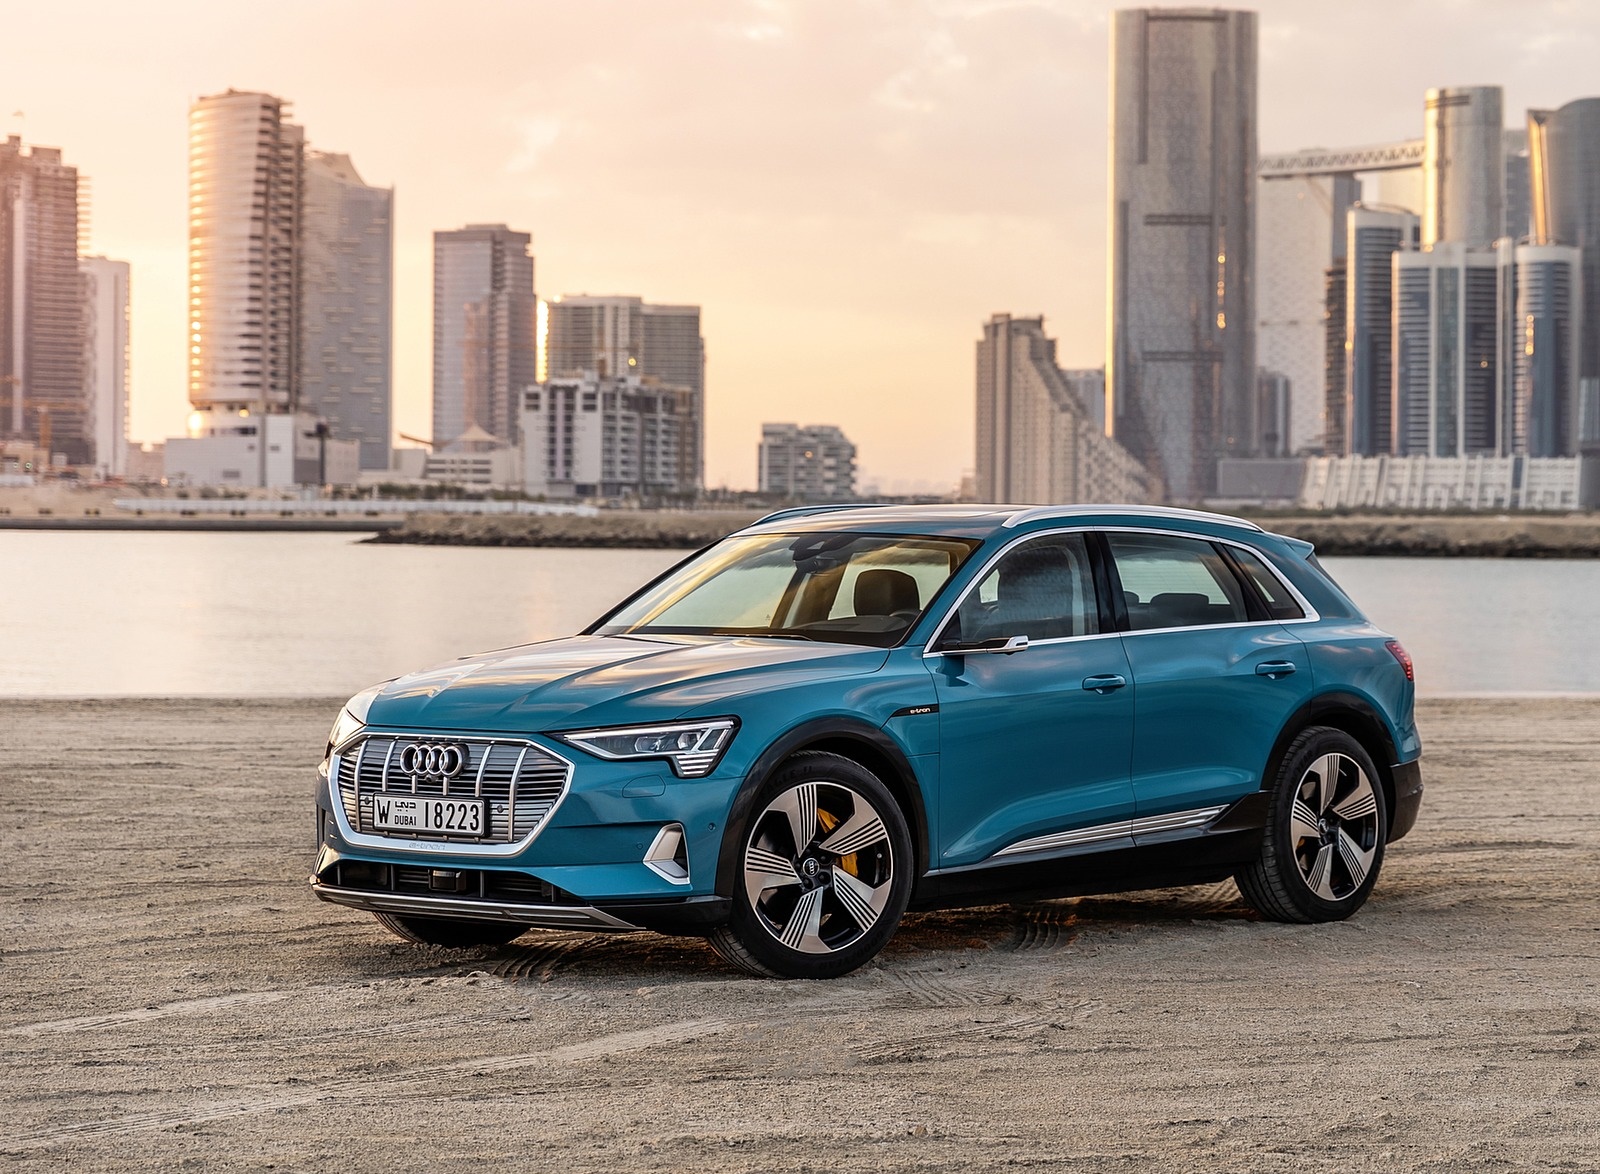 2019 Audi e-tron (Color: Antigua Blue) Front Three-Quarter Wallpapers #90 of 234